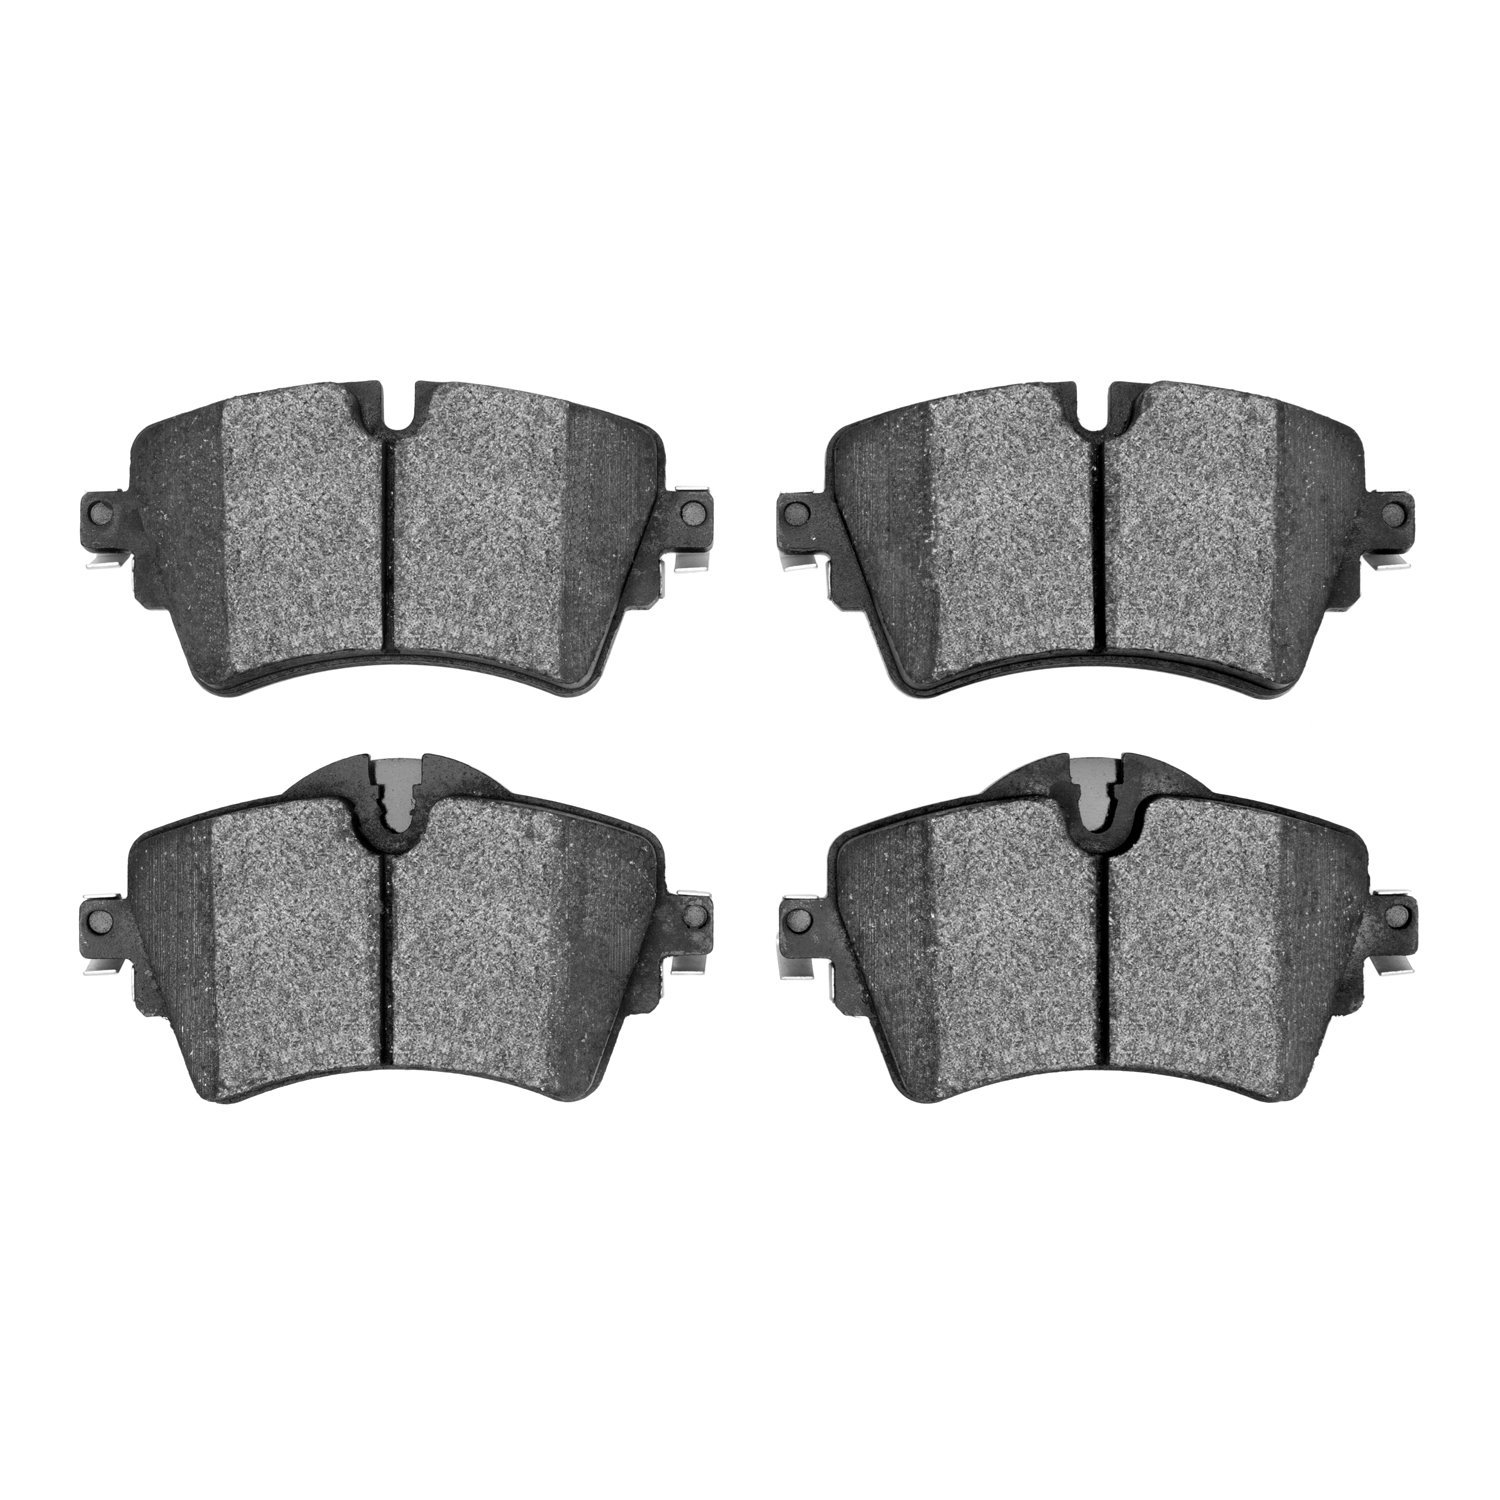 1600-1801-00 5000 Euro Ceramic Brake Pads, 2014-2021 Mini, Position: Front